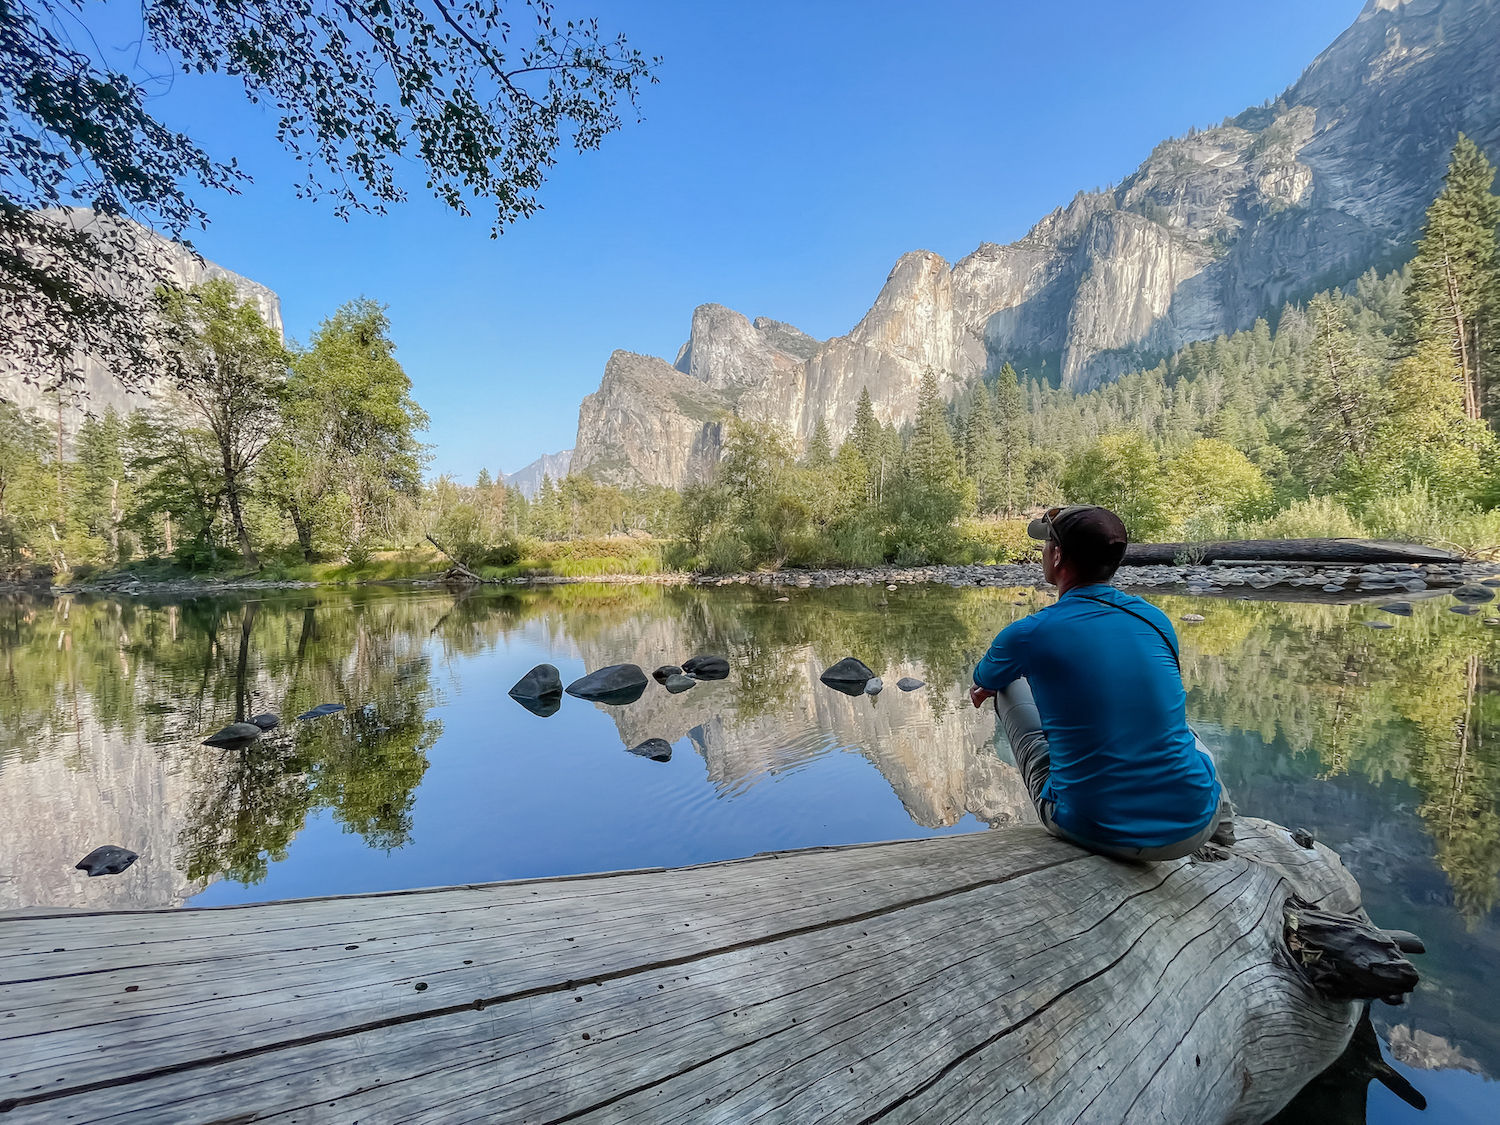 A traveler visiting Yosemite National Park